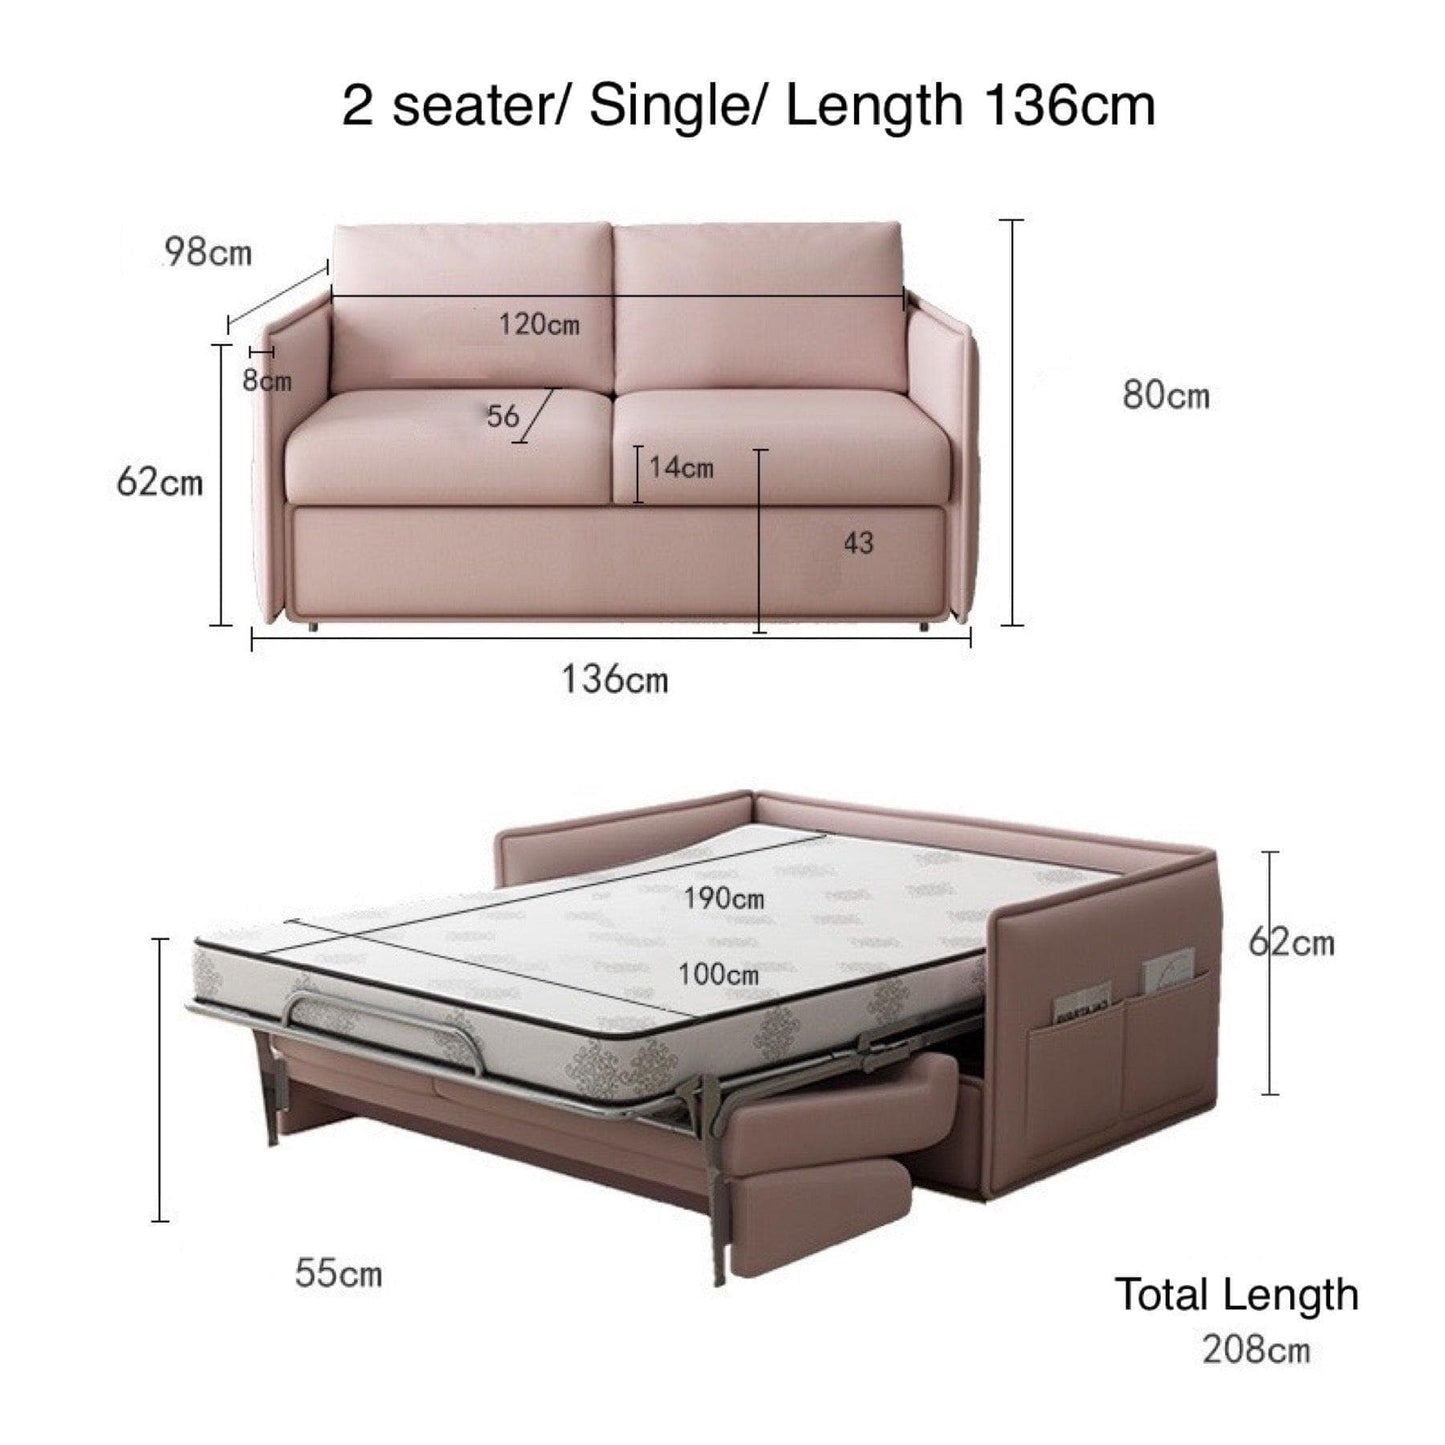 Home Atelier Cotton Linen Fabric / Single Size/ Length 136cm / Hermes Orange Ariel Foldable Sofa Bed with Mattress